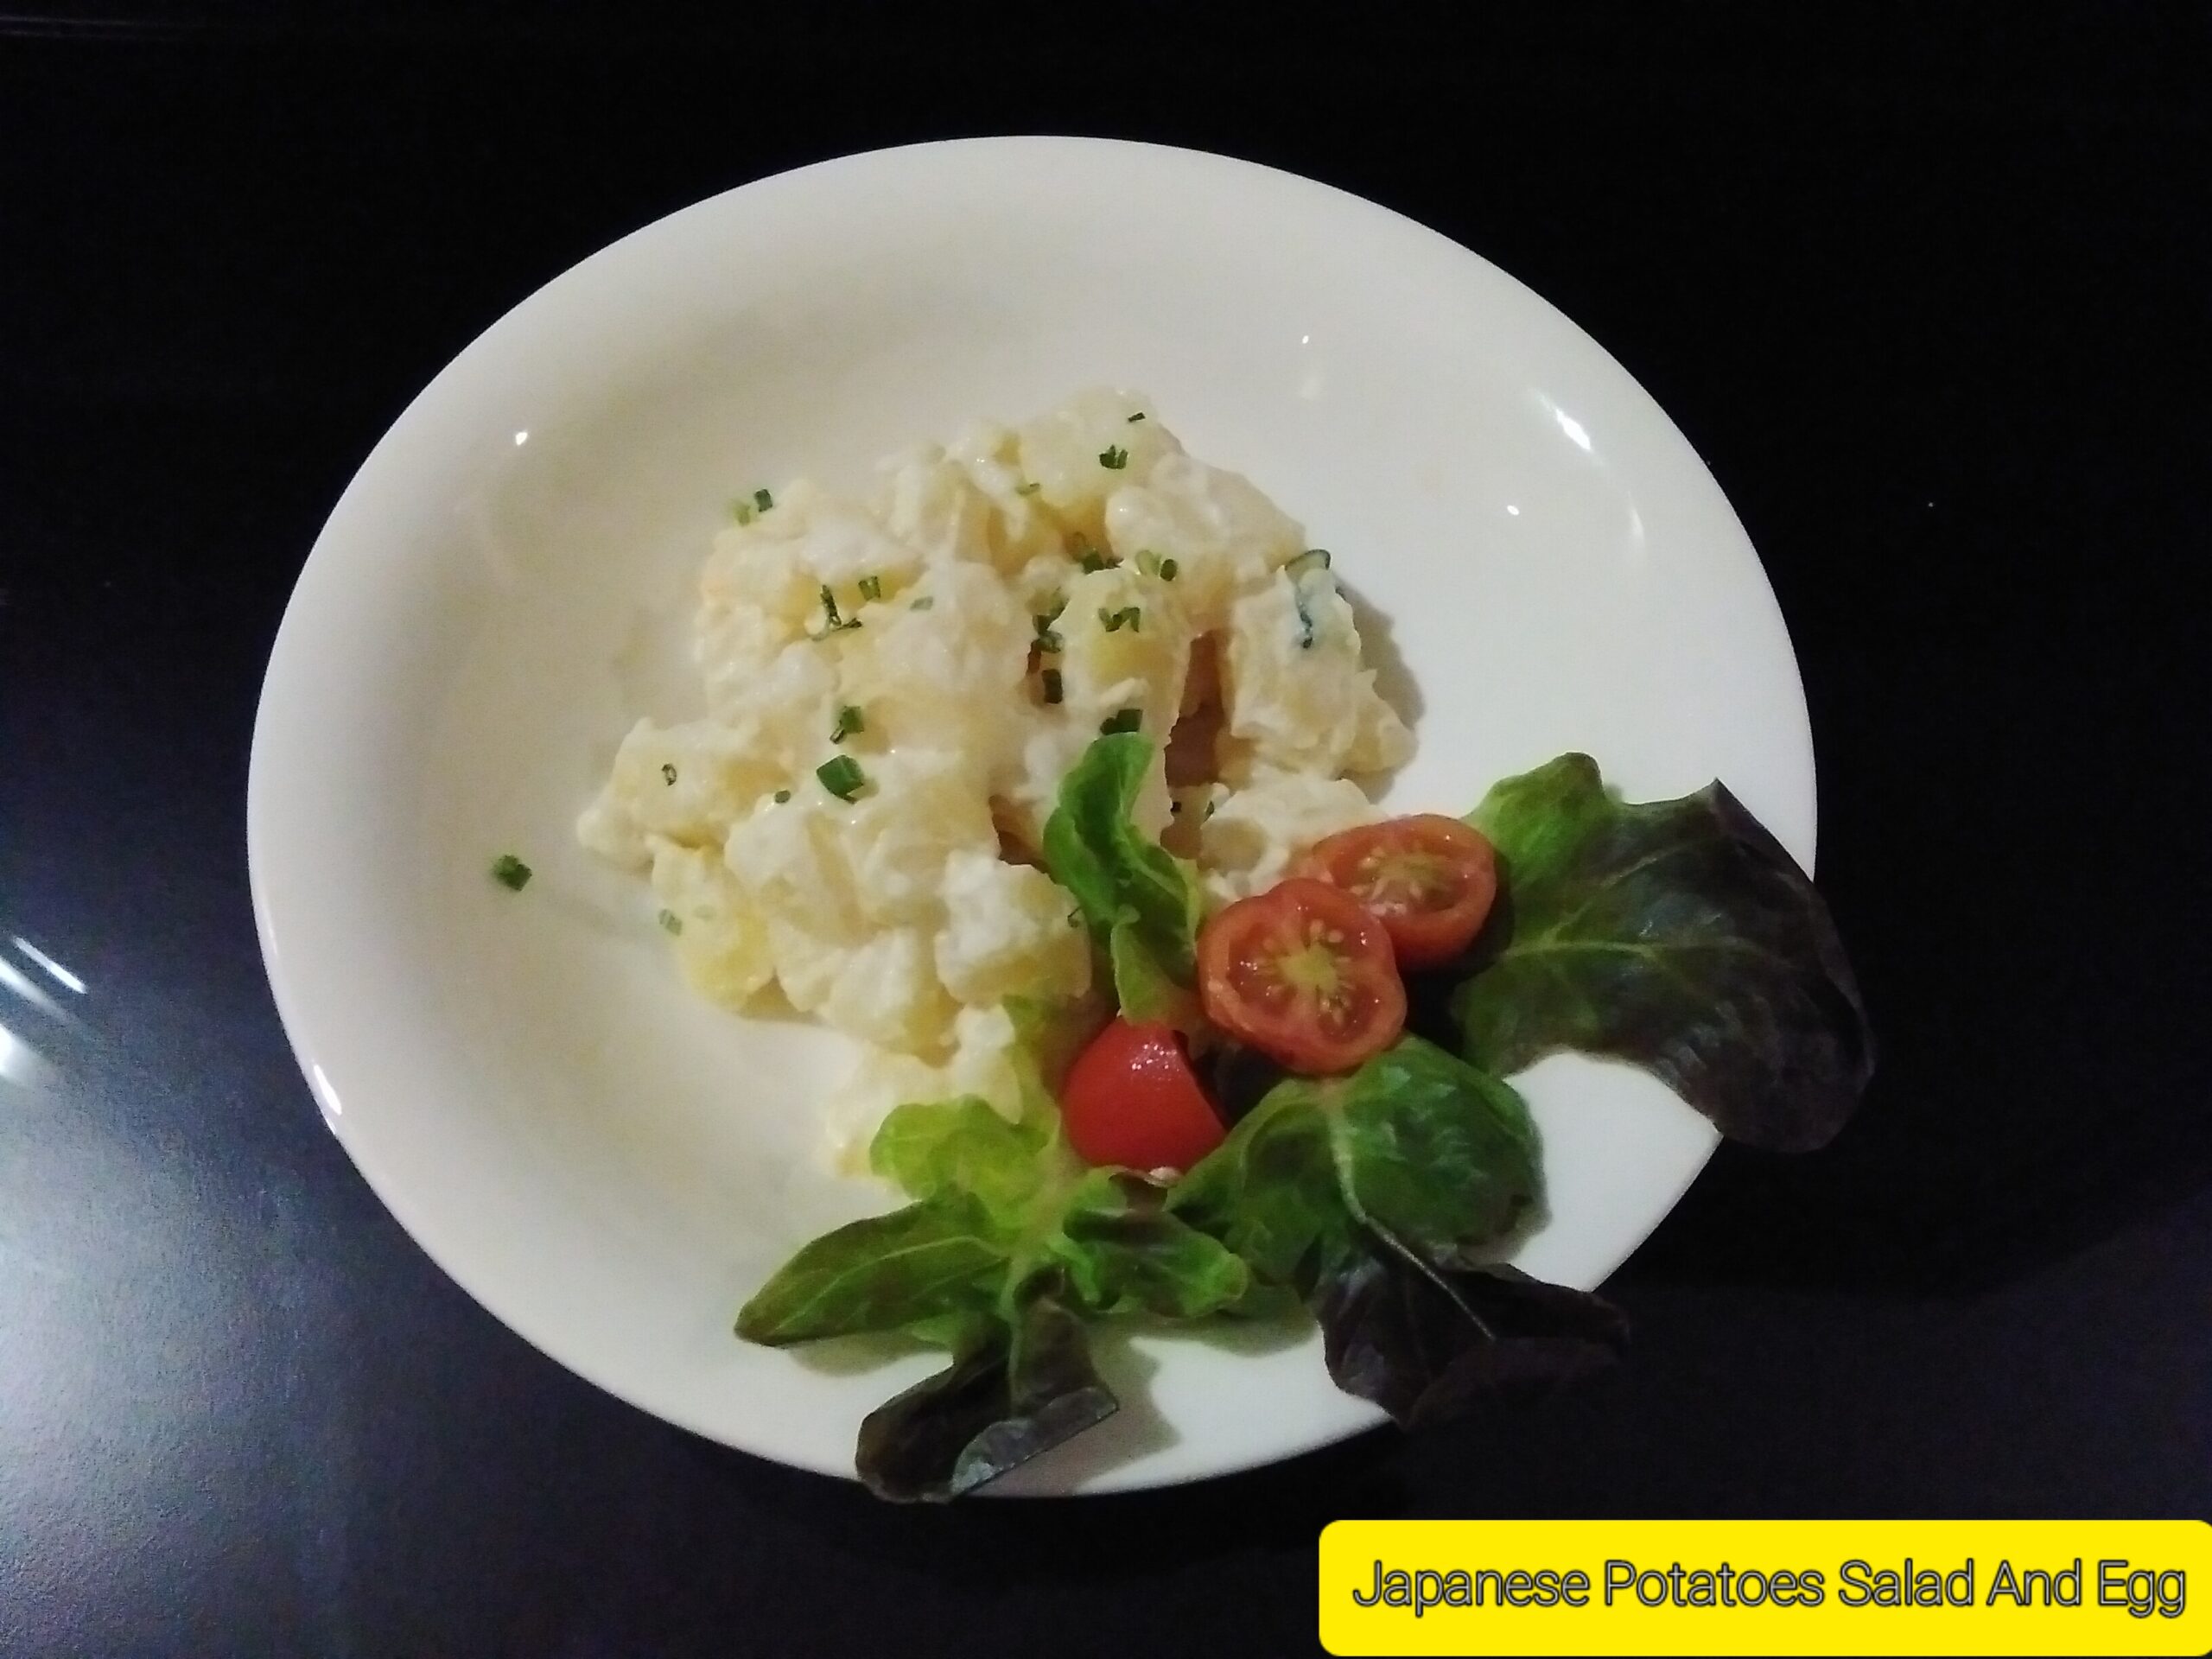 Japanese Potatoes Salad And Egg